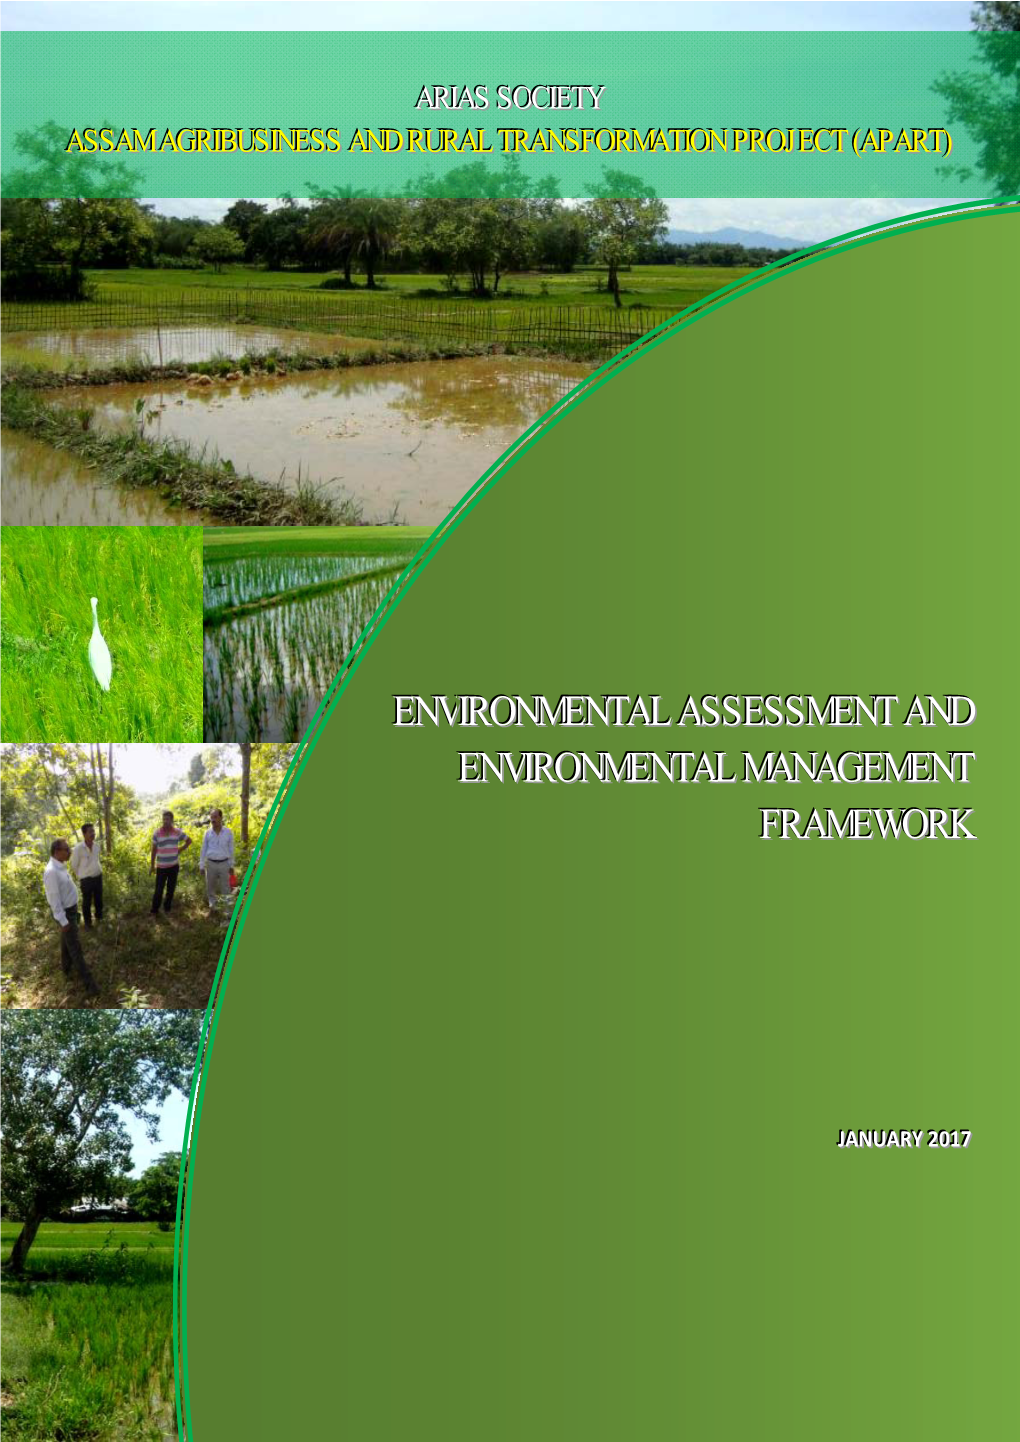 Environmental Assessment and Environmental Management Framework